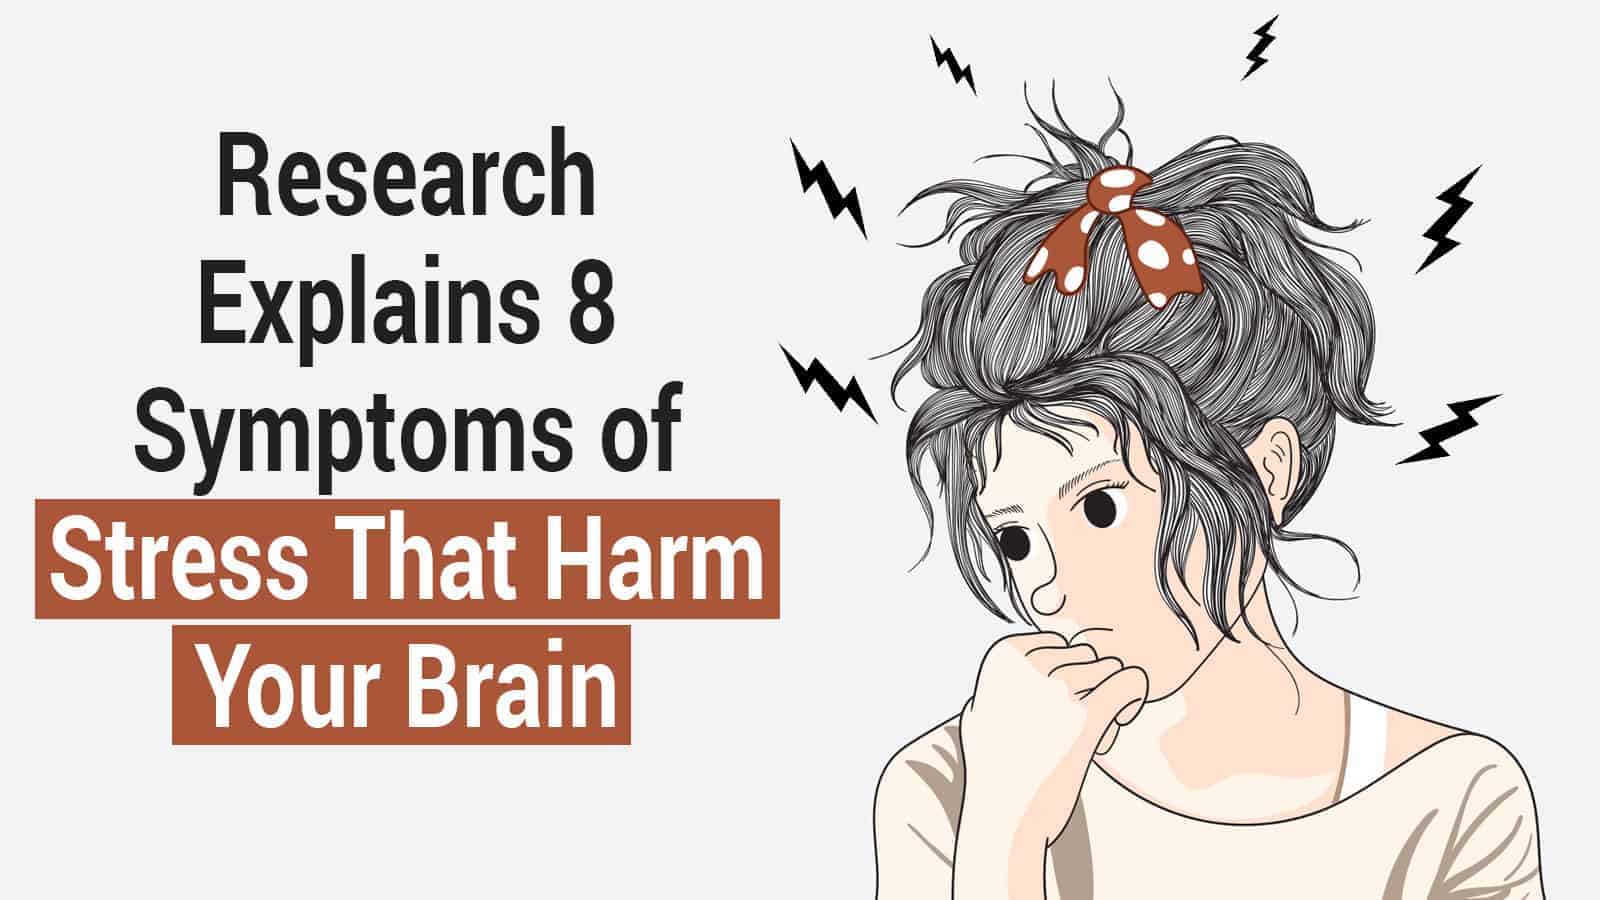 Research Explains 8 Symptoms of Stress That Harm Your Brain